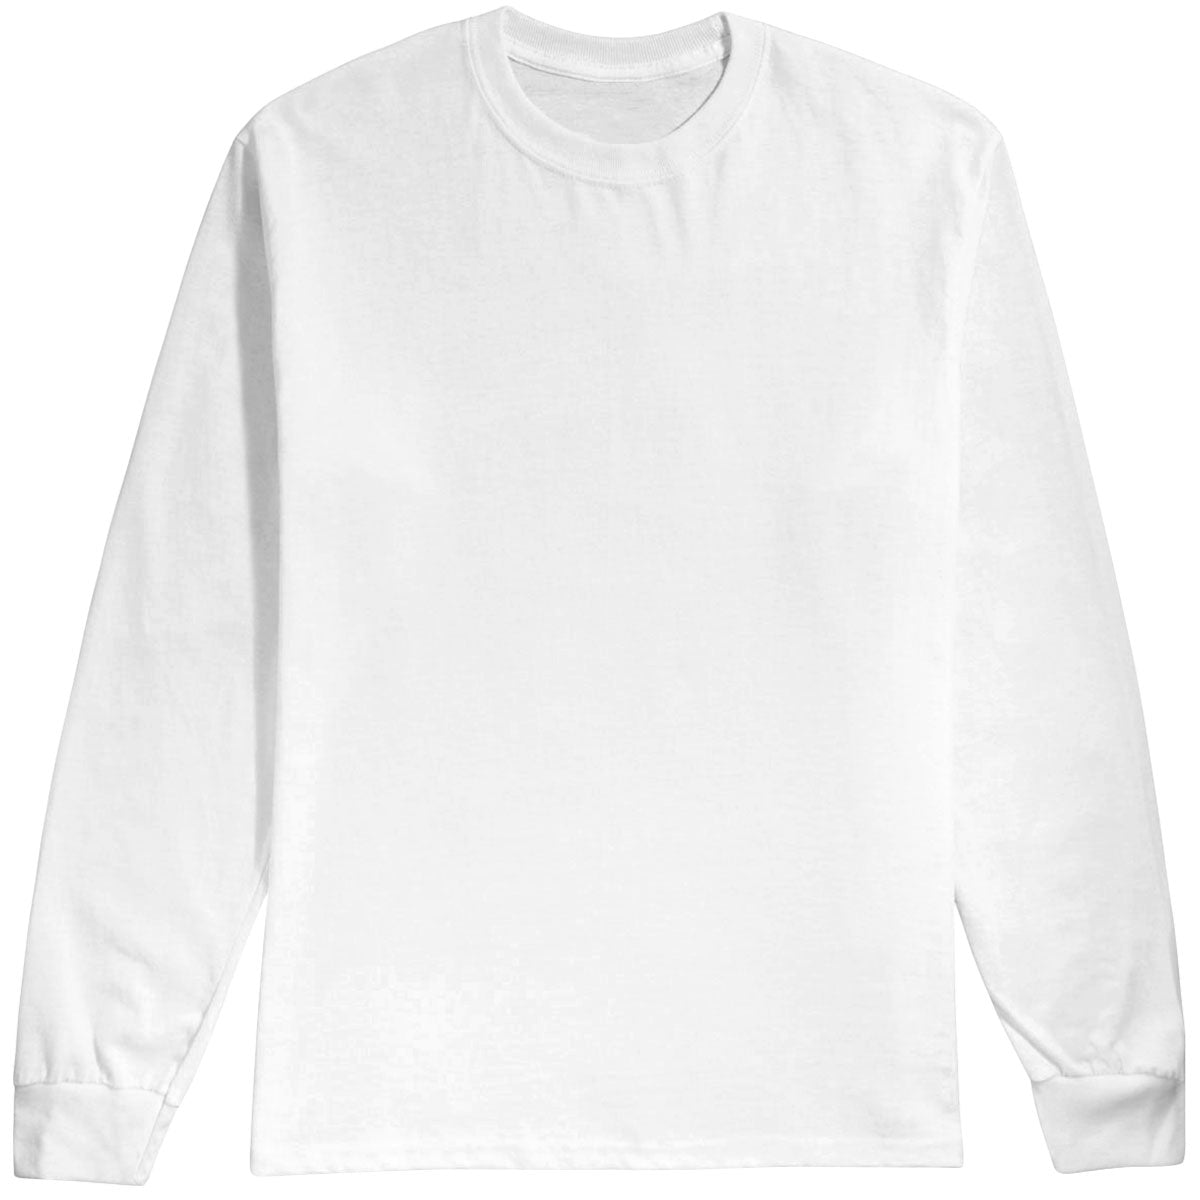 Nathan McKee Shop Front Long Sleeve T-Shirt image 2